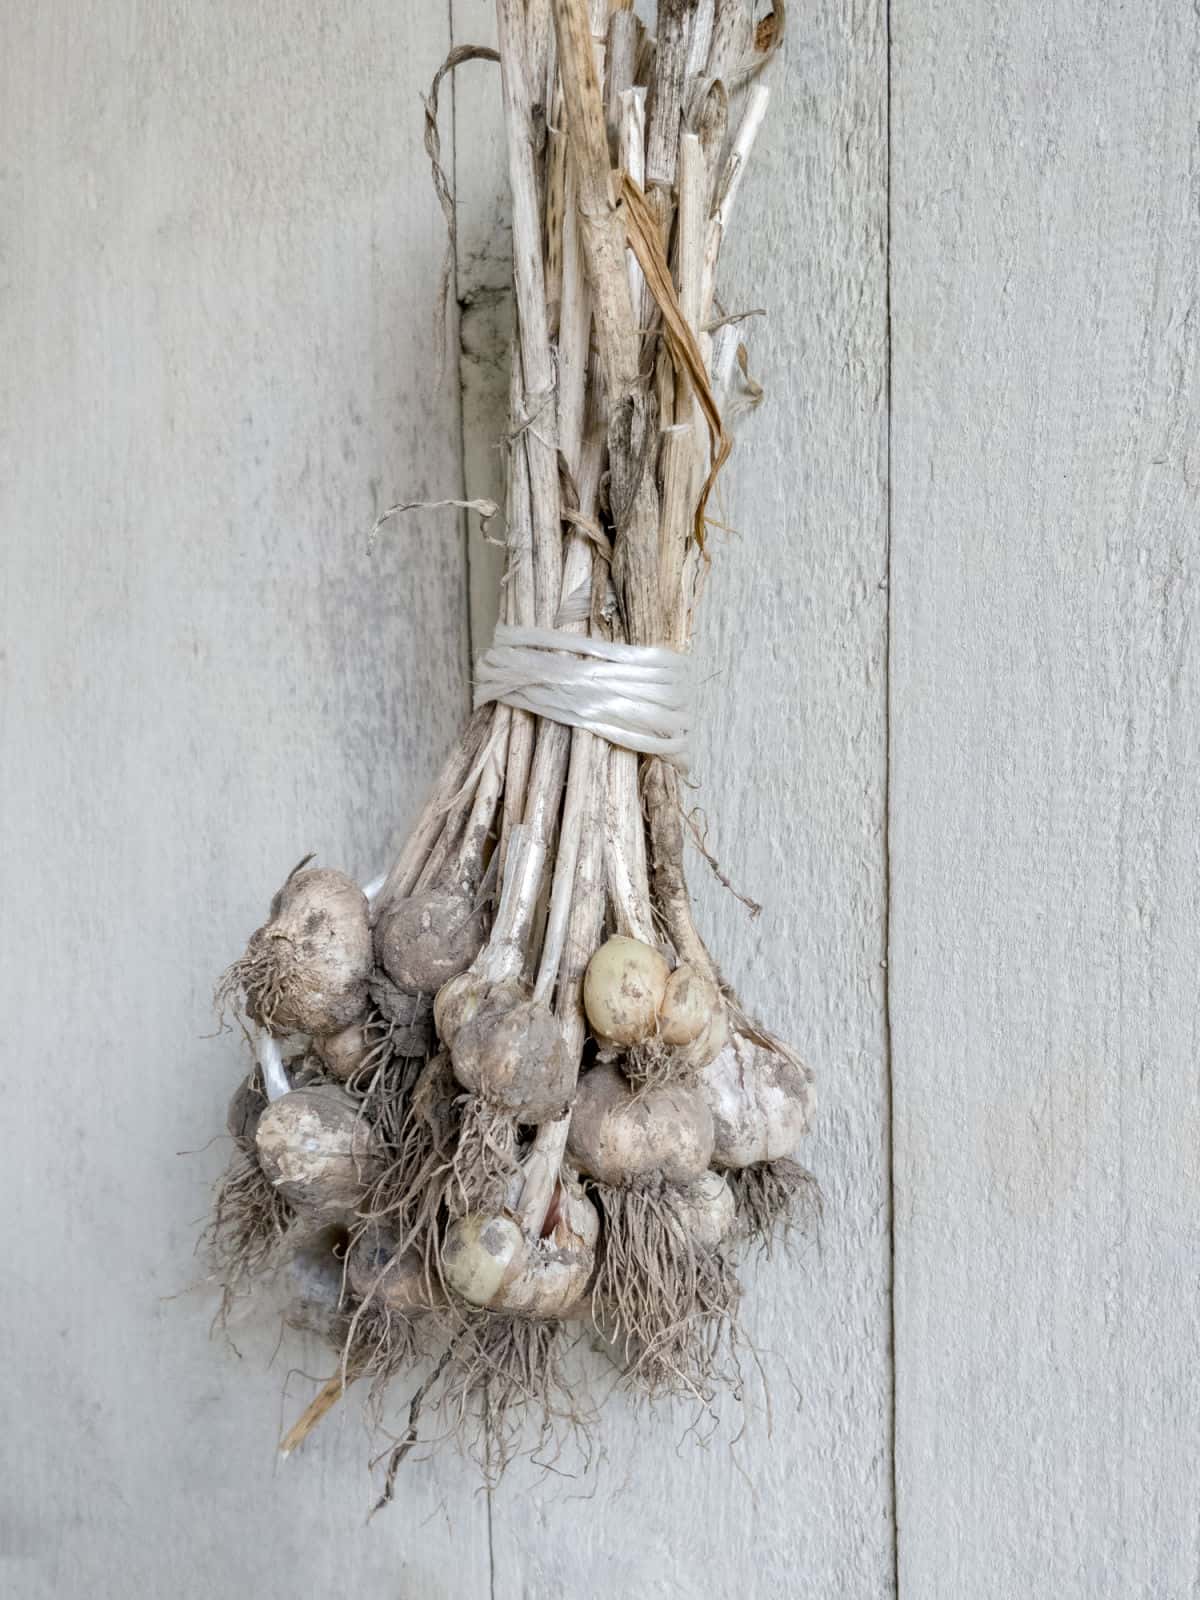 Drying Garlic Bulbs Hanging On The Wall